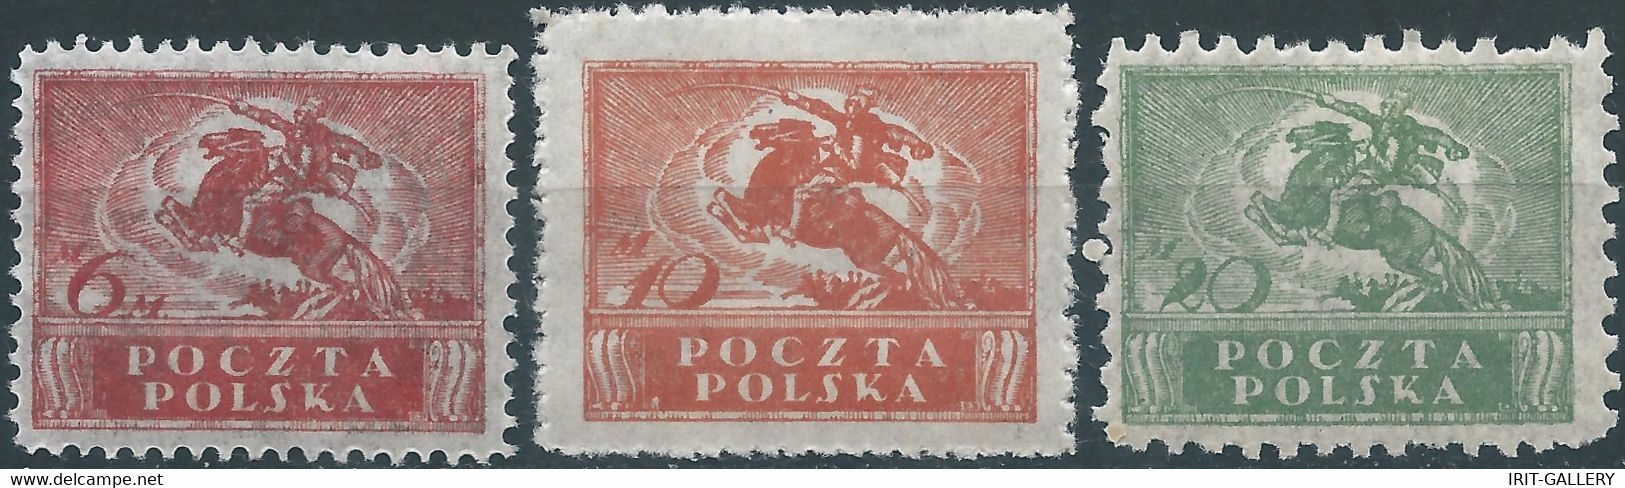 POLONIA-POLAND-POLSKA,1919 South And North Poland Issues,Mint - Neufs